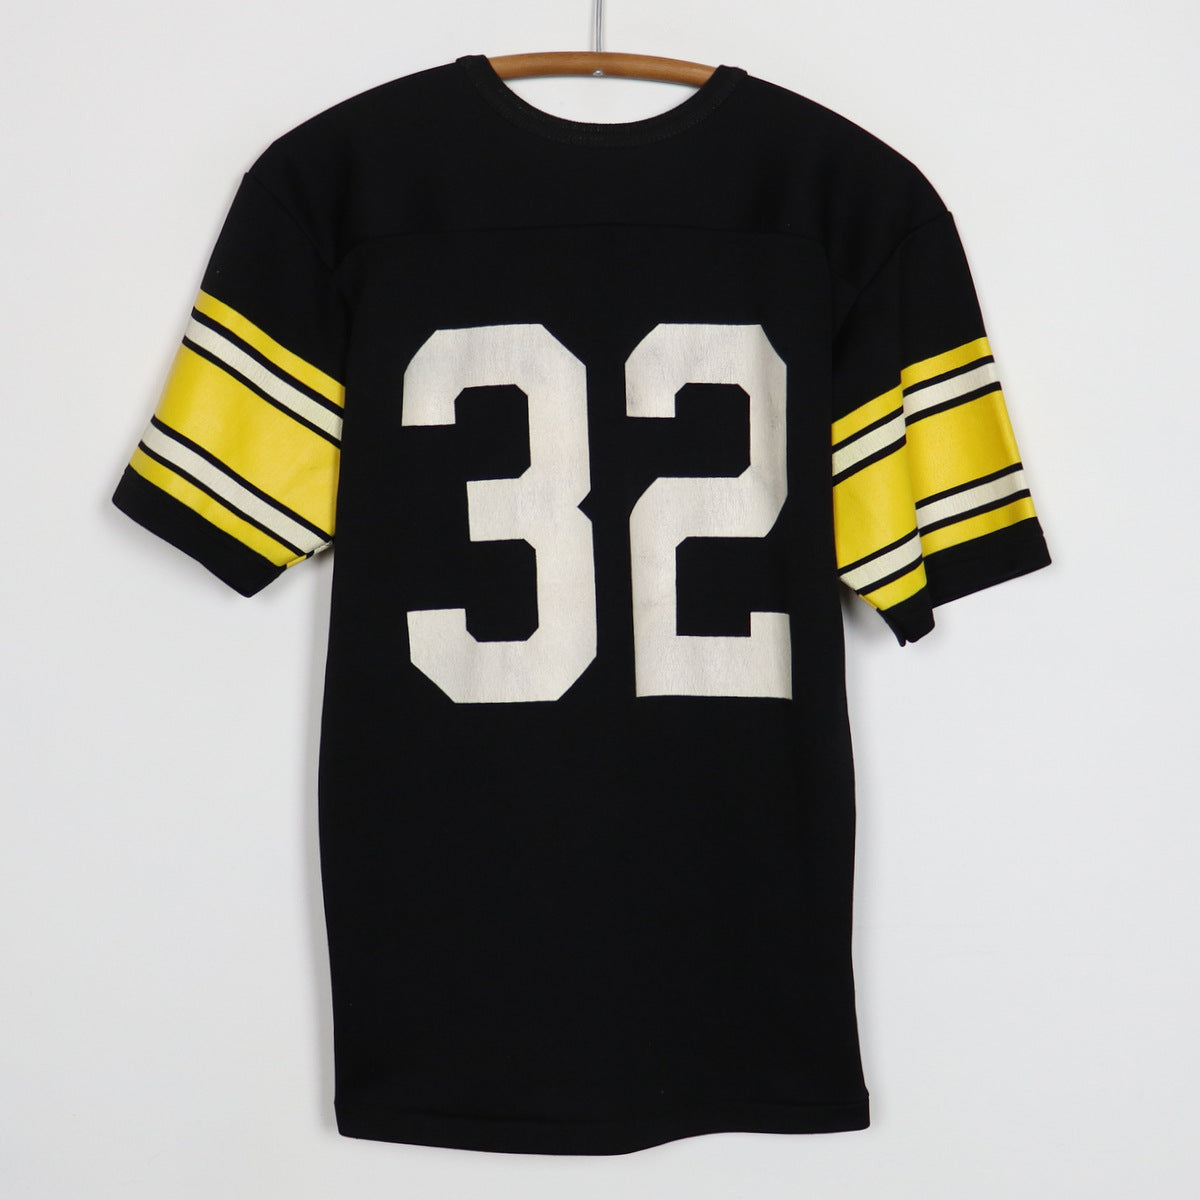 Wyco Vintage 1980s Pittsburgh Steelers Rawlings Football Jersey